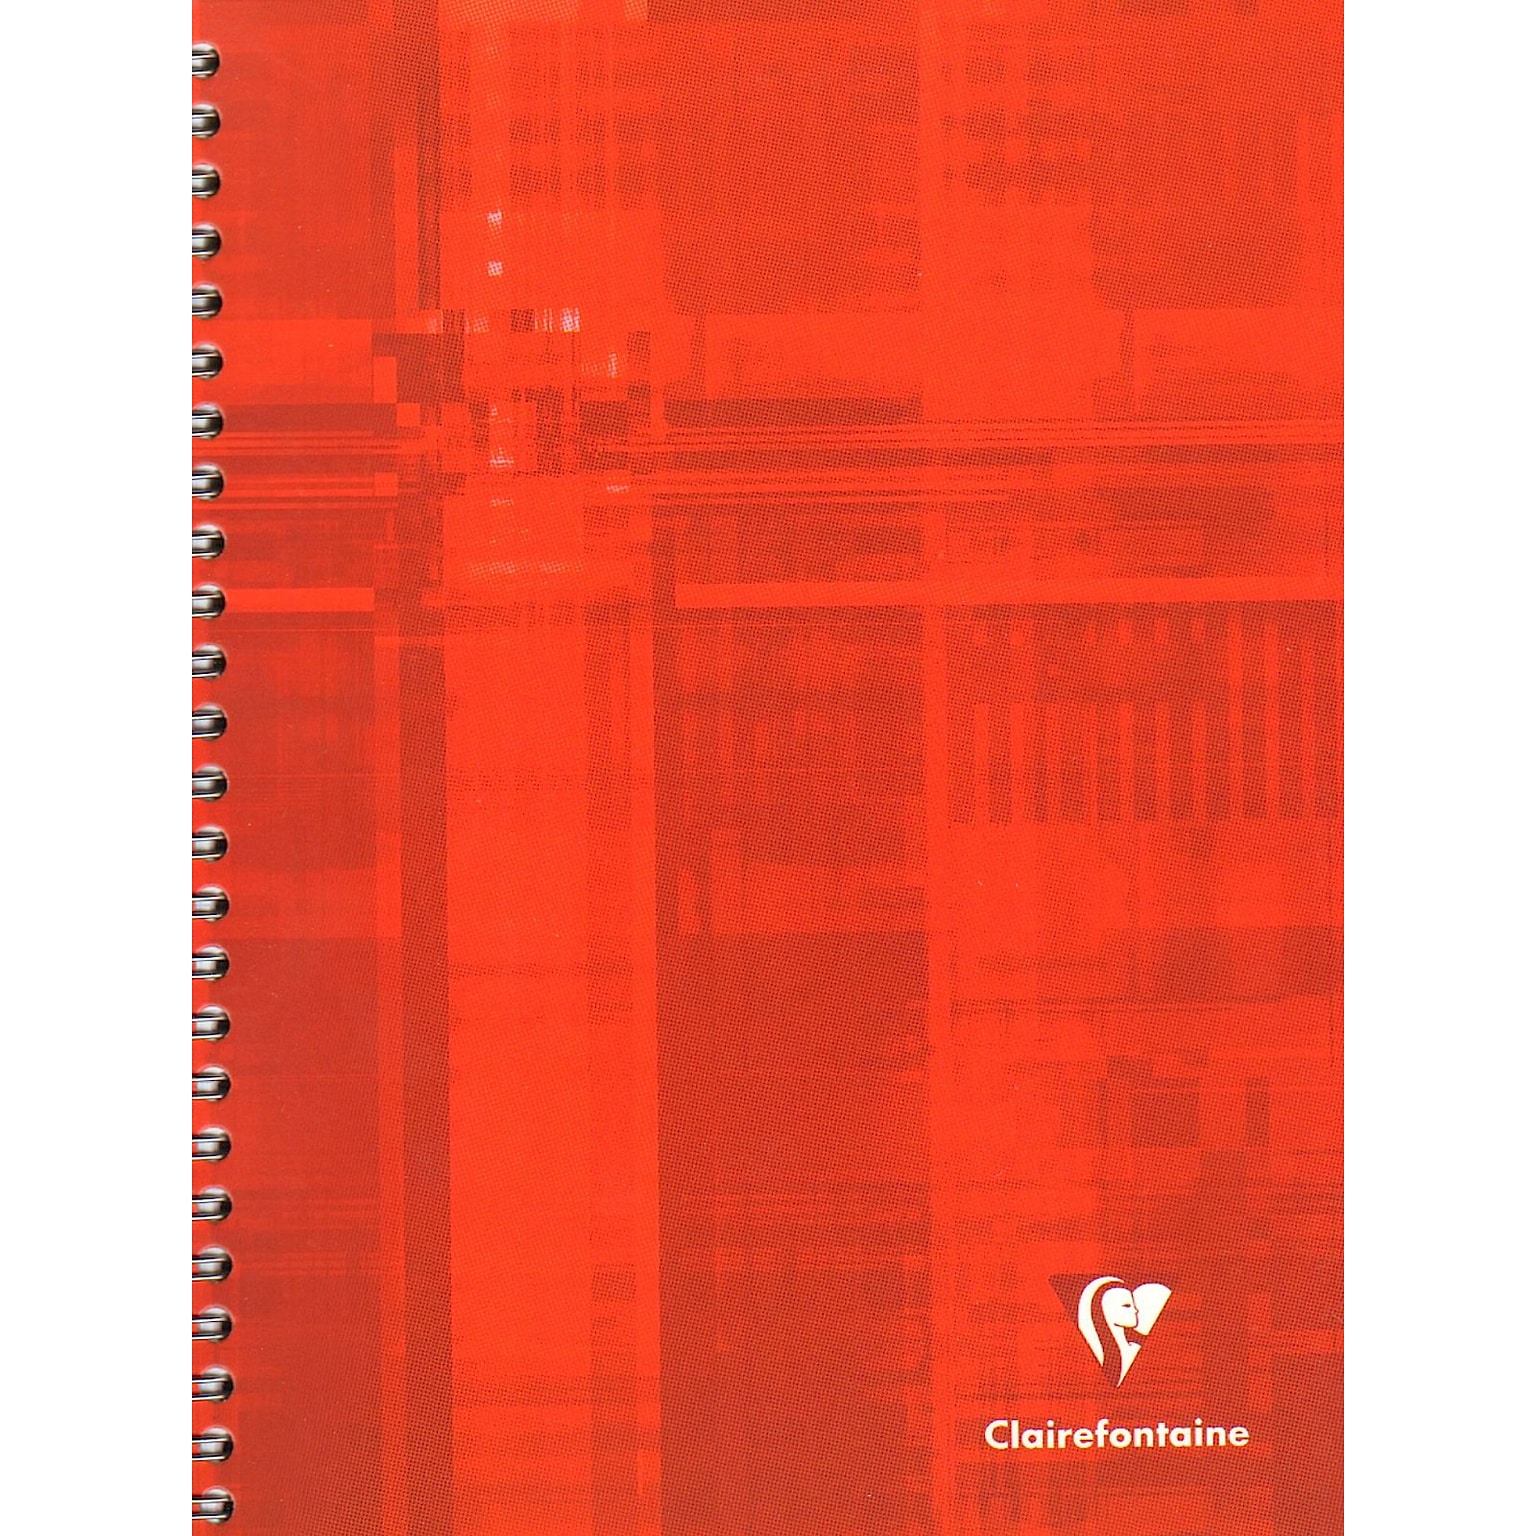 Clairefontaine Subject Notebooks, 6.75 x 8.625, Quad, 75 Sheets, Orange (26703)